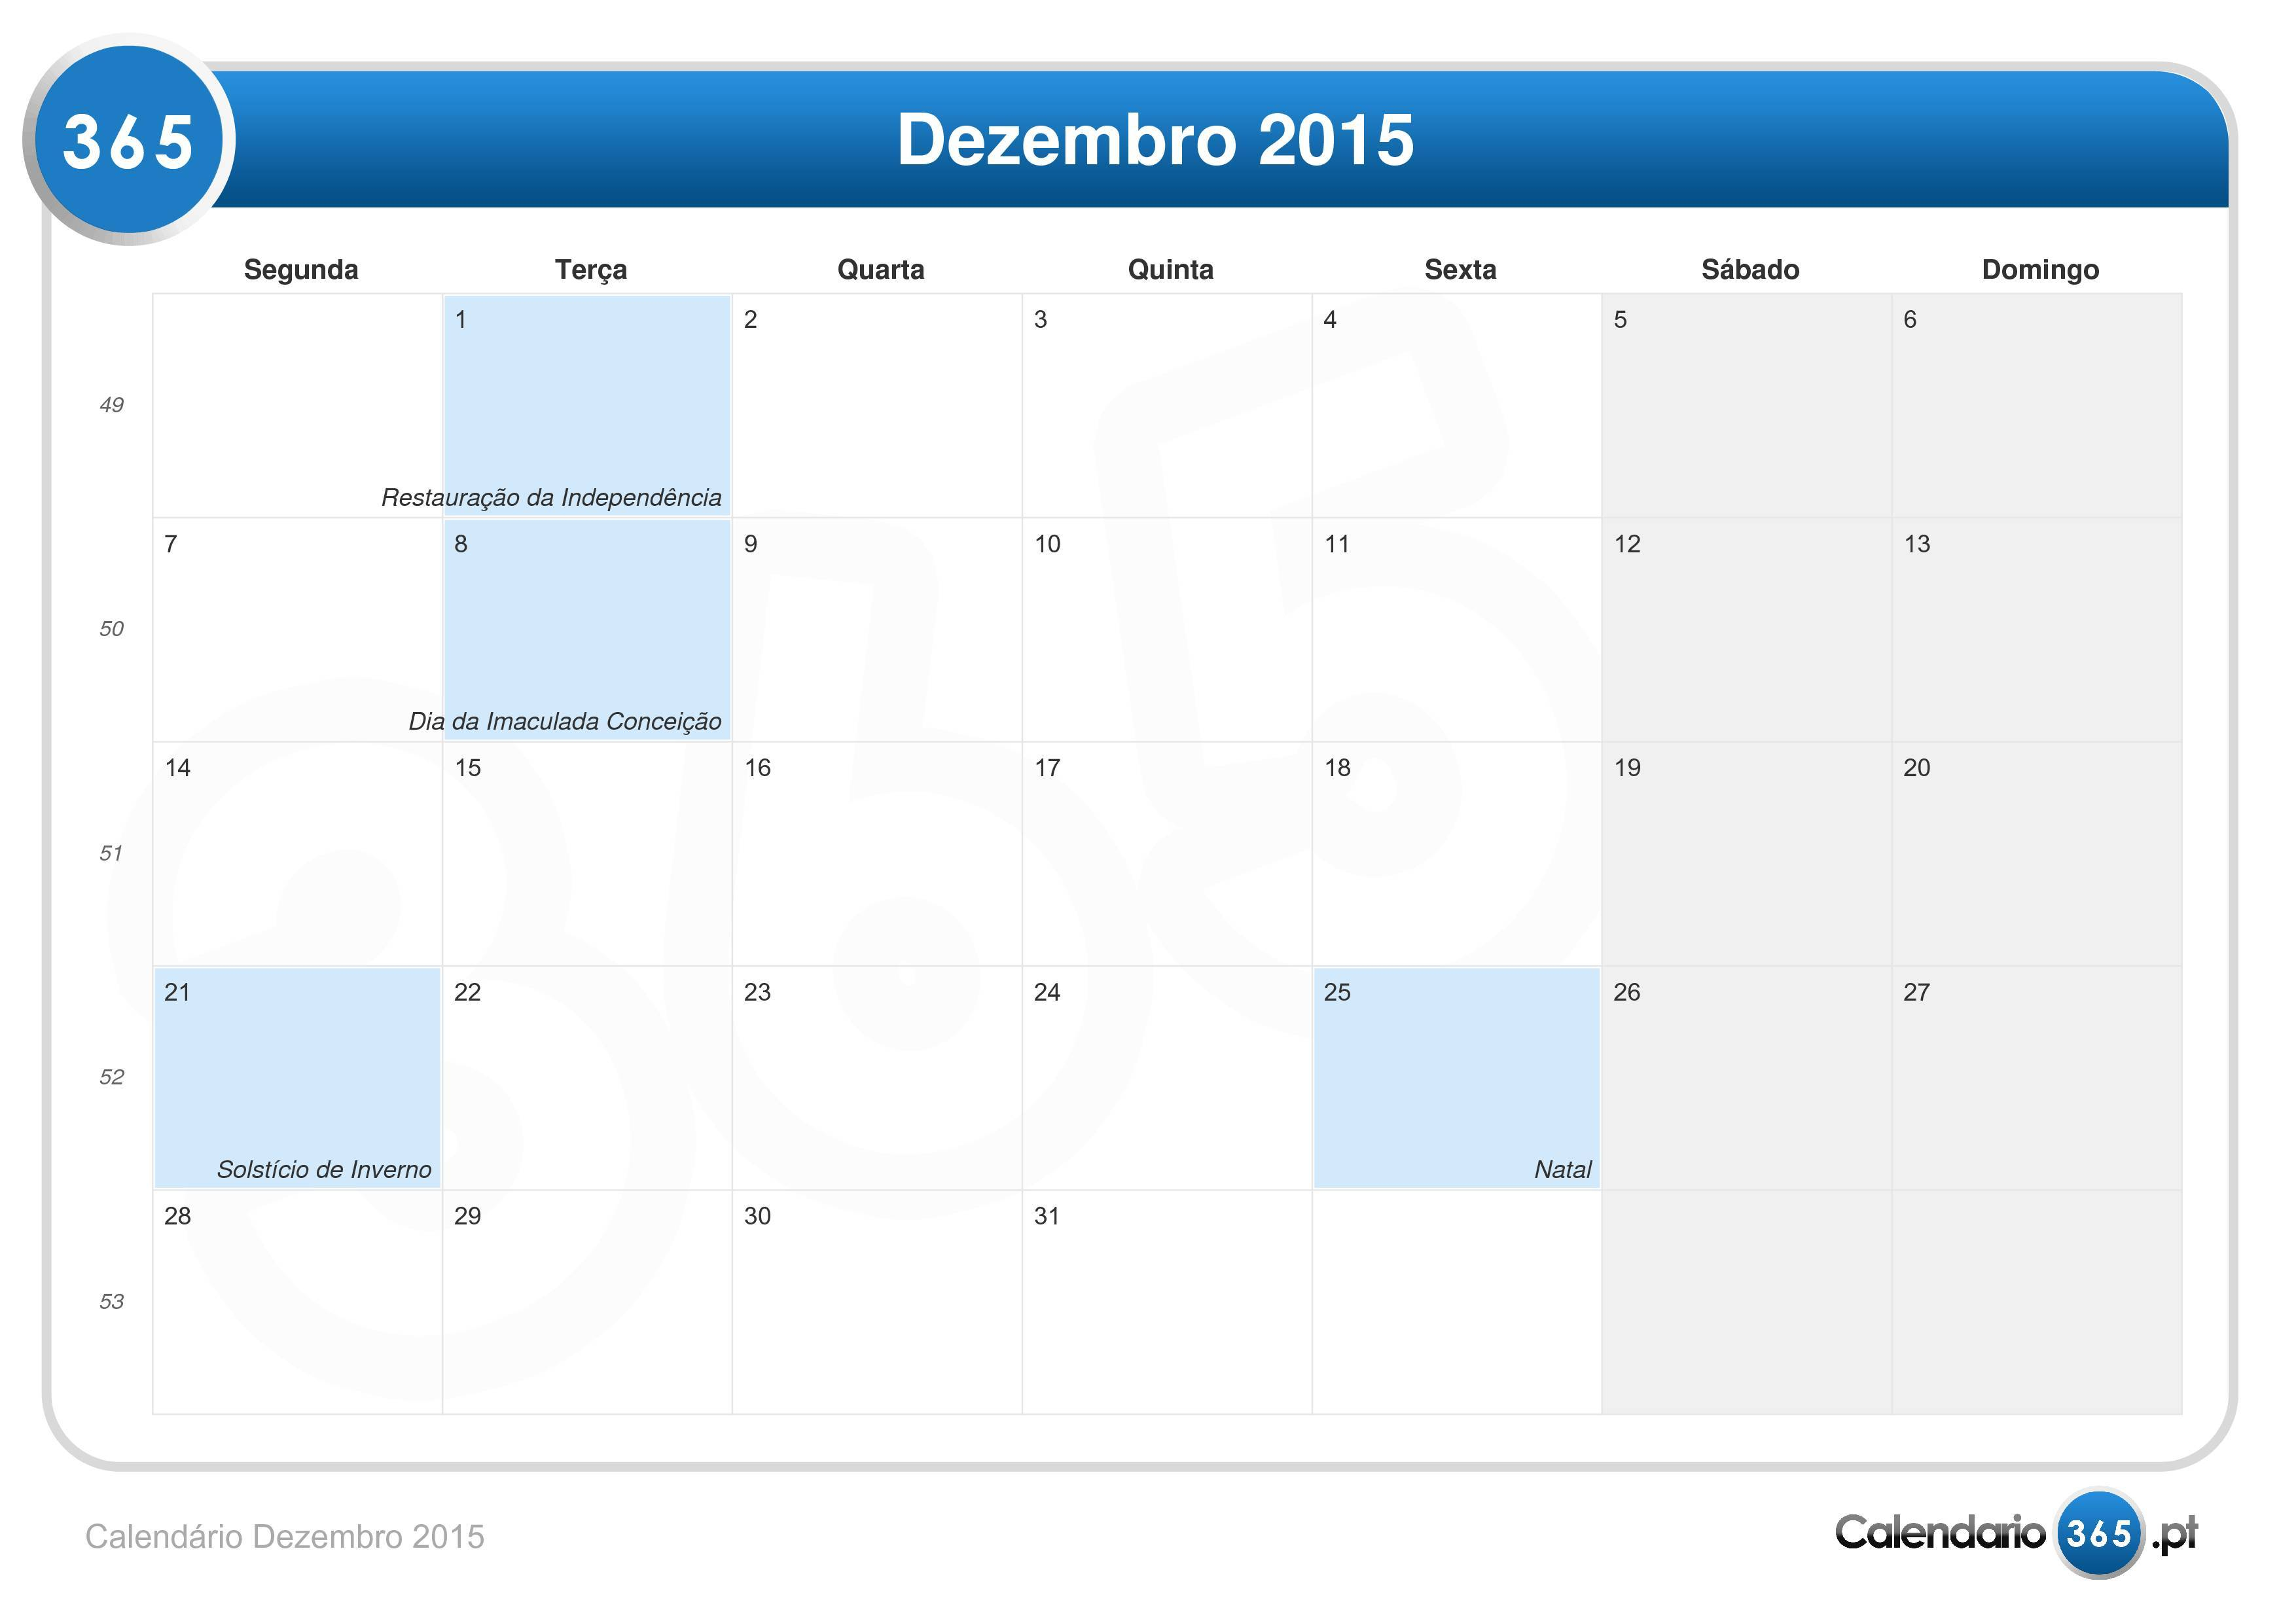 Calendário Dezembro 2015 with regard to Calendario Dezembro De 2015